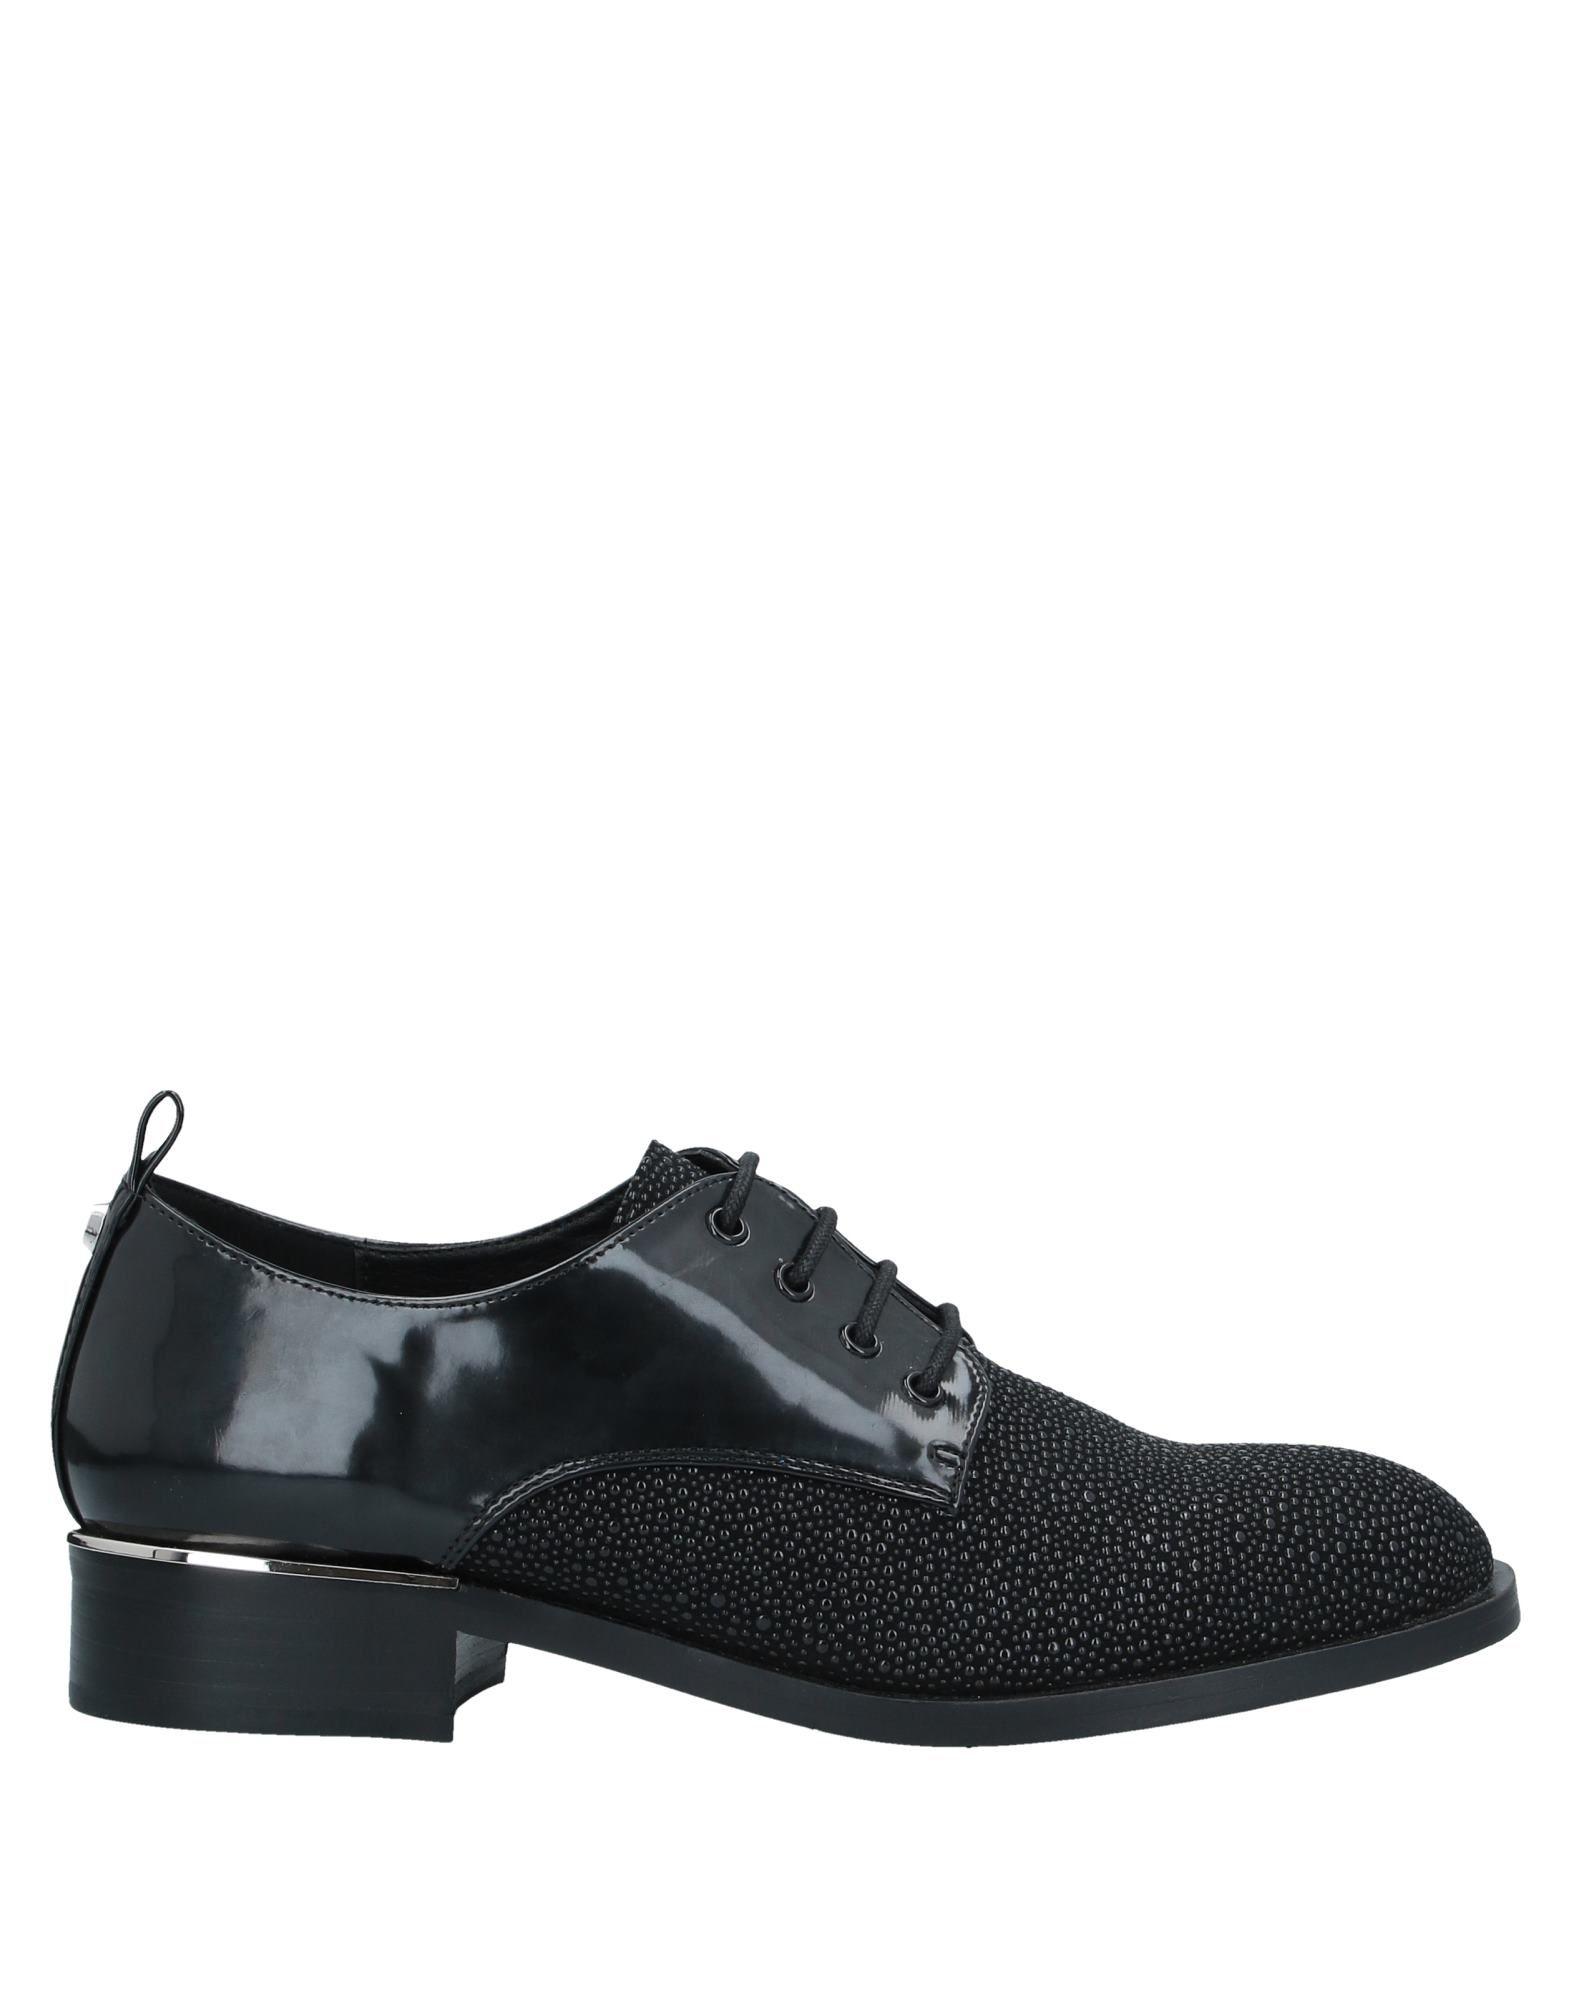 GAUDI Lace-up Shoe in Black - Lyst